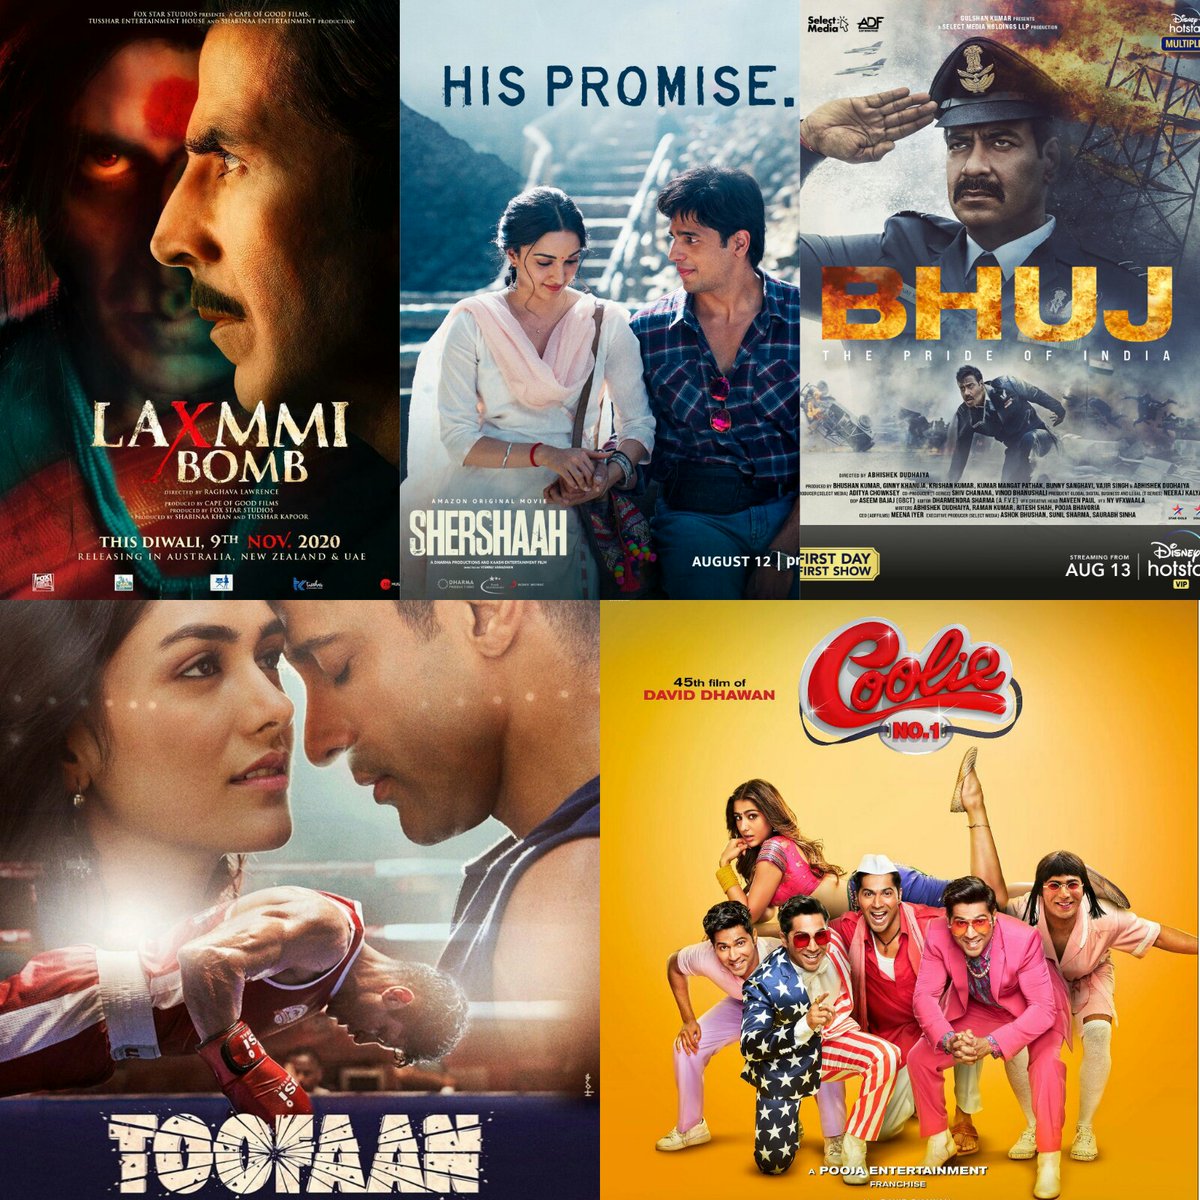 TOP 5 Most Streamed Bollywood Movies On OTT Platform
Since October 2020

👉#Laxmii : 23.1M
👉#Shershaah : 21.1M
👉#Bhuj : 14.8M
👉#Toofaan : 14.7M
👉#CoolieNo1 : 12.6M

#AkshayKumar #SidharthMalhotra
#AjayDevgan #VarunDhawan 
#KiaraAdvani #SaraAliKhan
#FarhanAkhtar #MrunalThakur